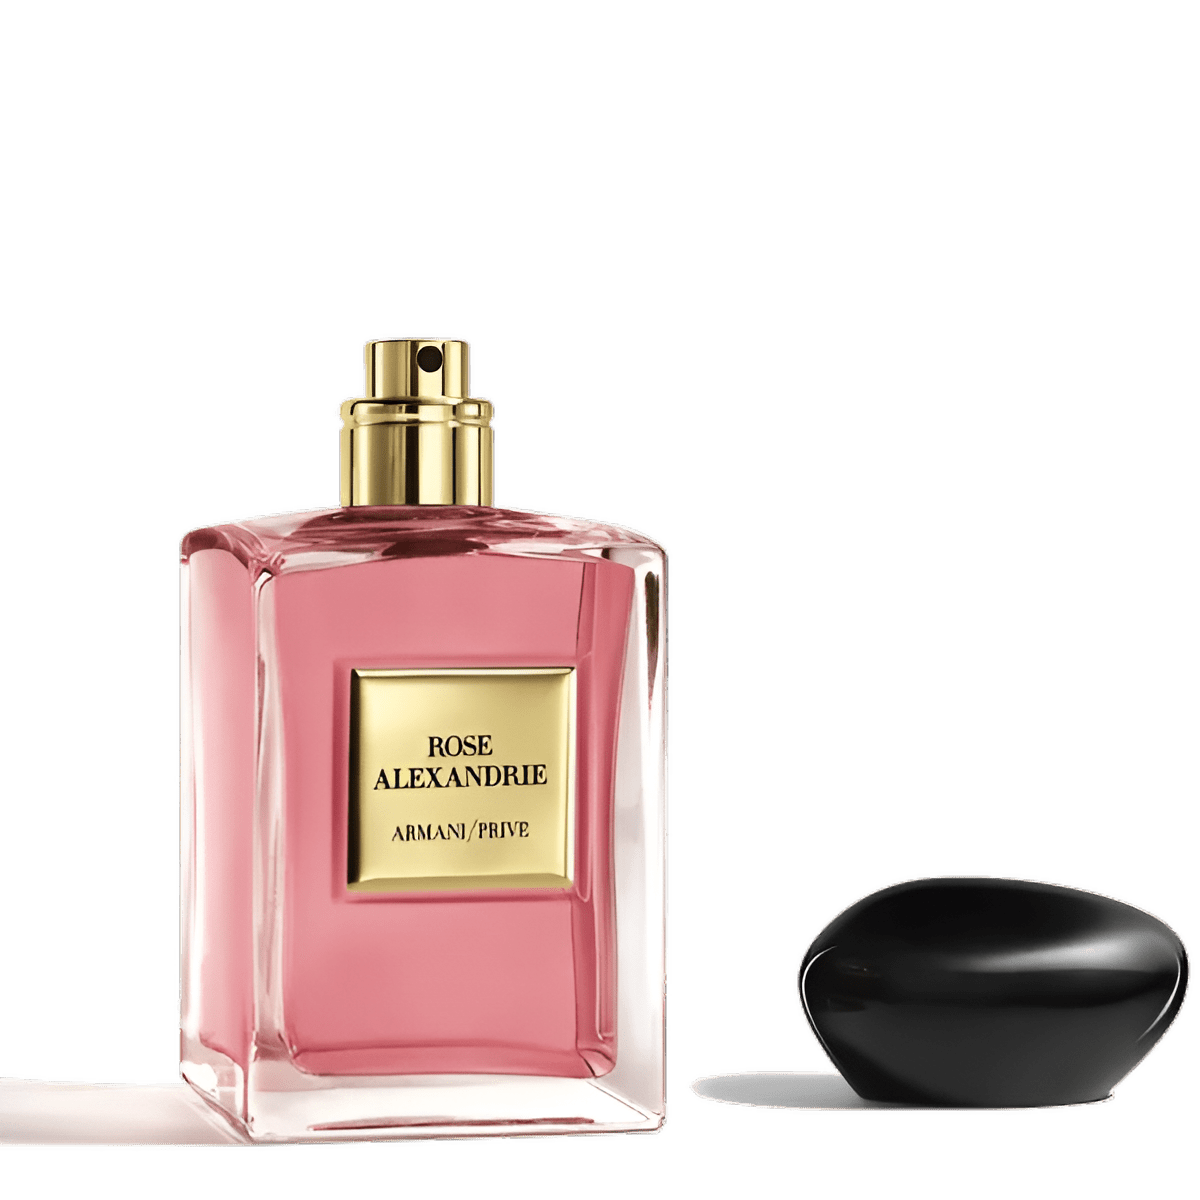 Giorgio Armani Armani Prive Rose Alexandrie EDT | My Perfume Shop Australia